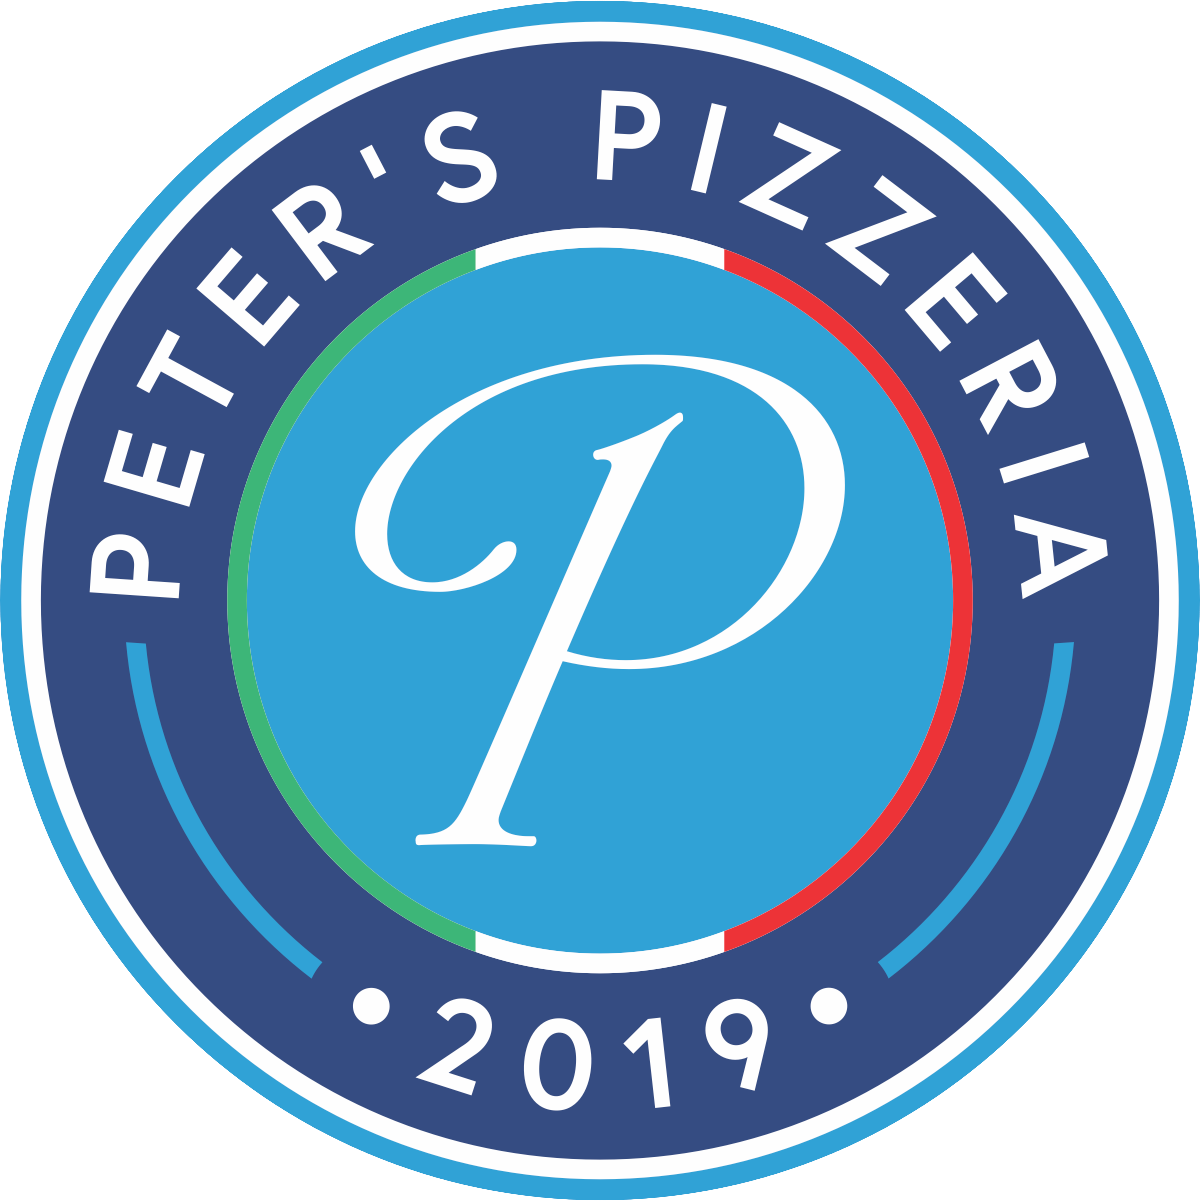 peter pan logo | ShopLook